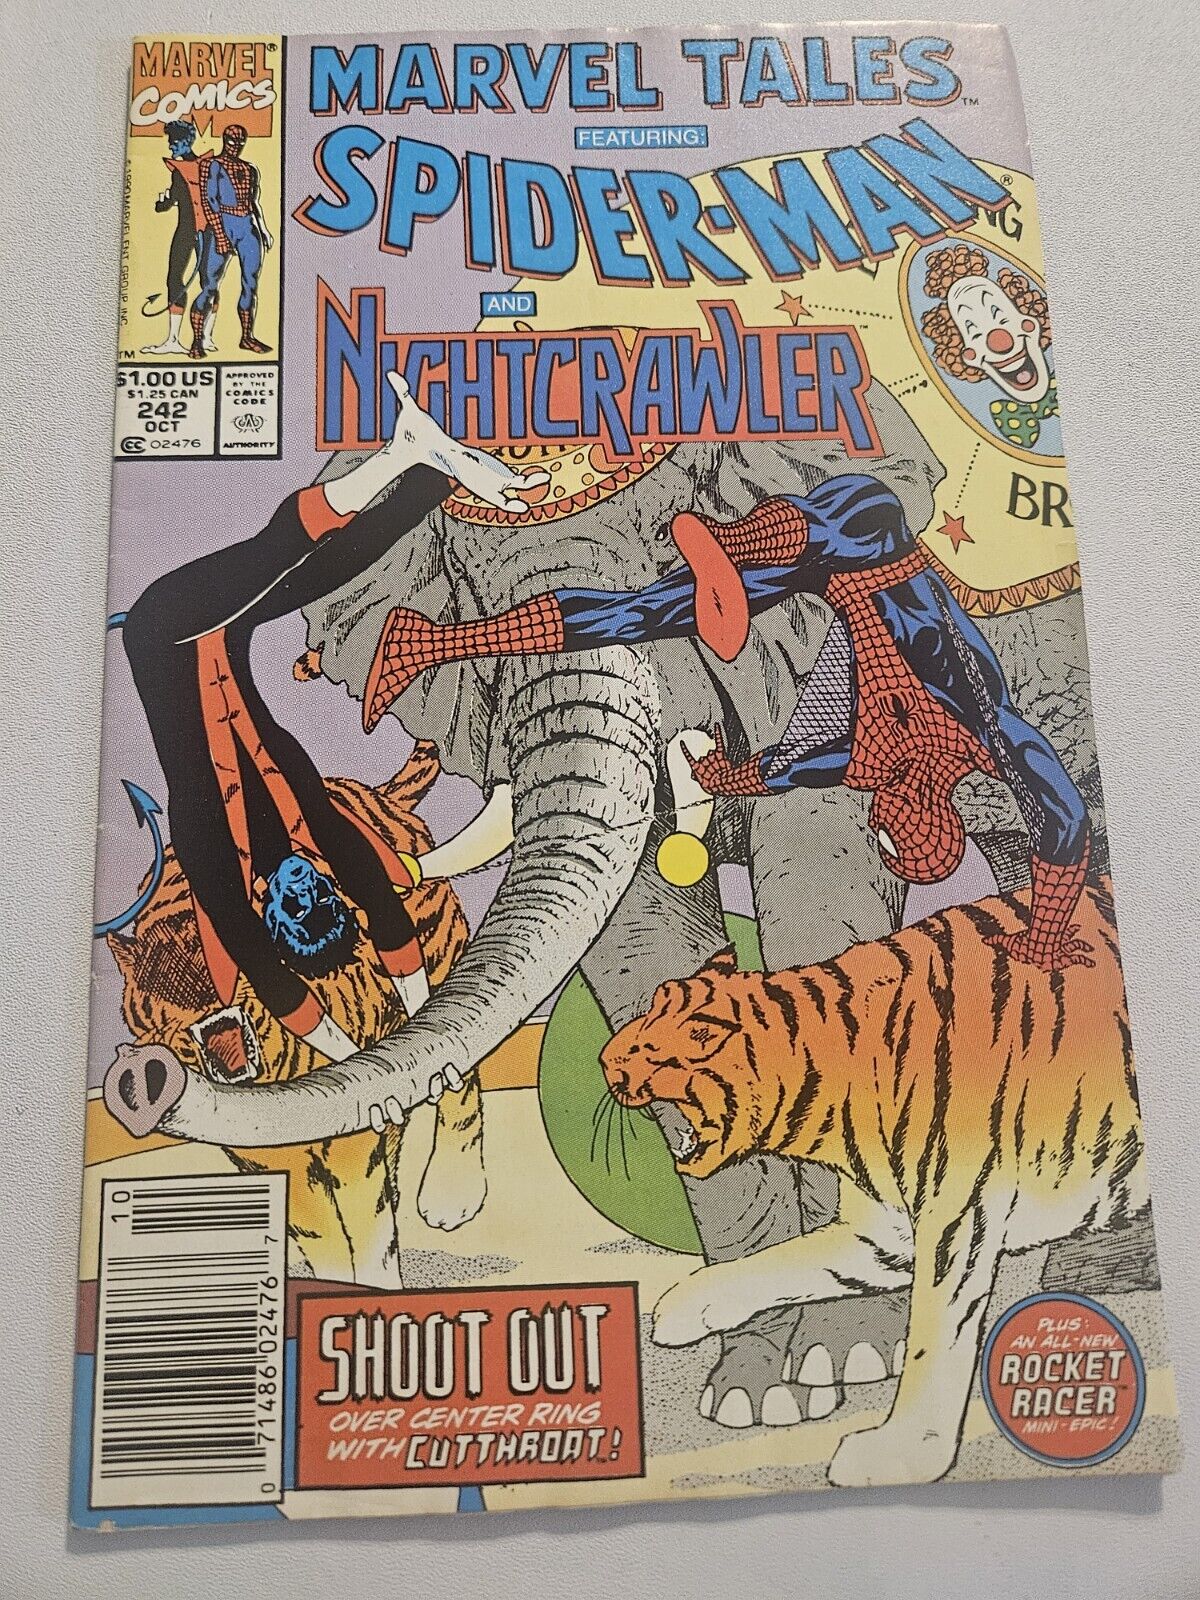 Marvel Tales #242 1990 - Spider-Man and Nightcrawler